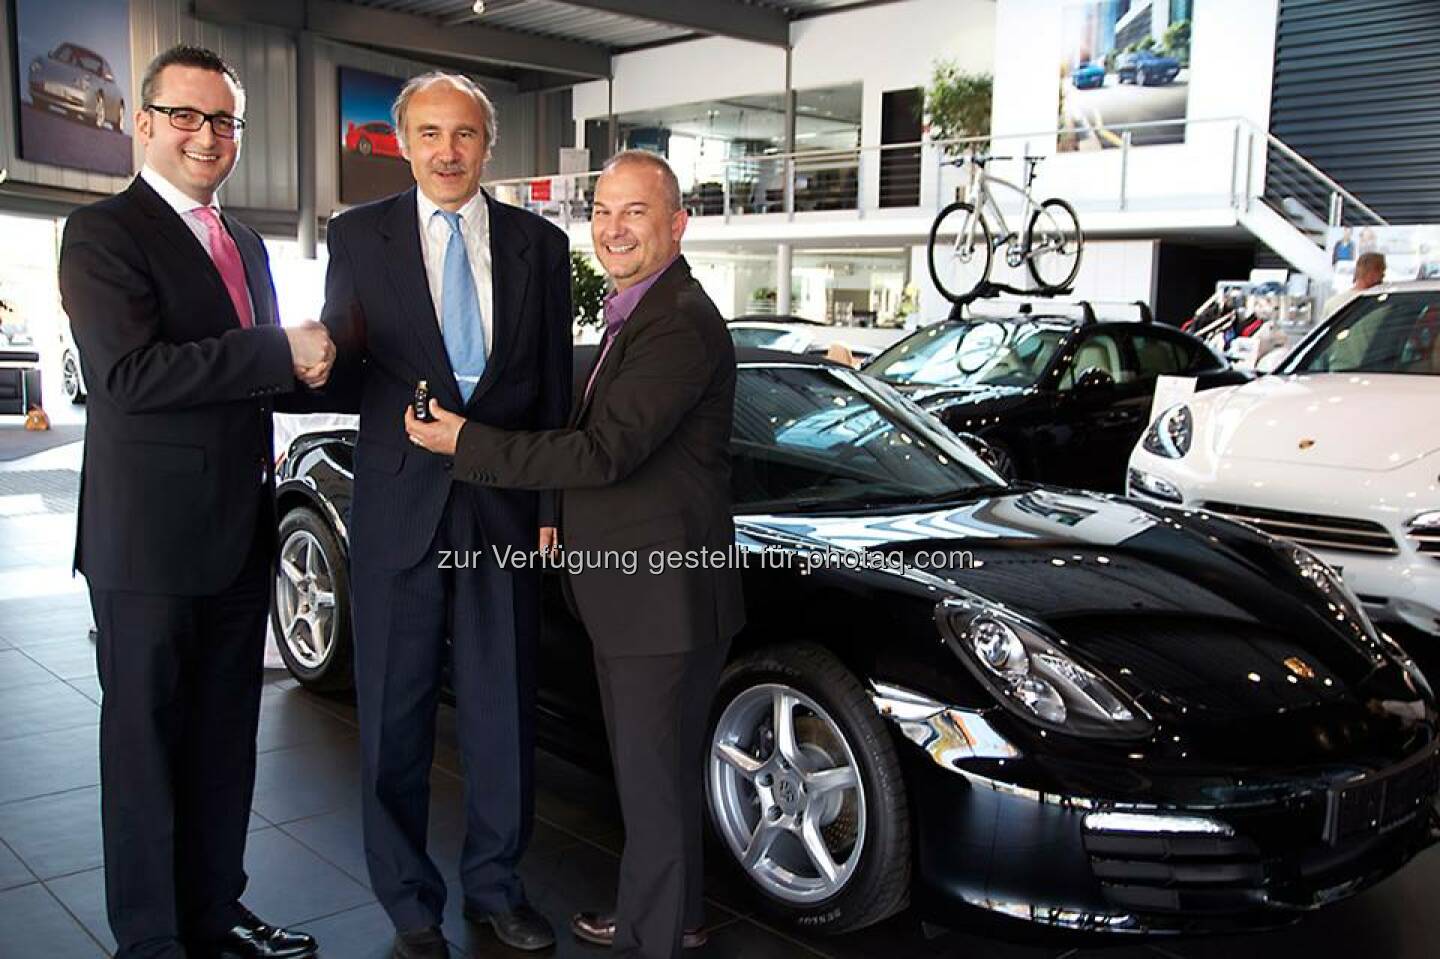 Die Börse Frankfurt Zertifikate AG gratuliert dem Sieger der dritten Trading Masters Staffel und wünscht Ihm viel Spass mit seinem fabrikneuen Porsche Boxster.  Source: http://twitter.com/zertifikateboersefra